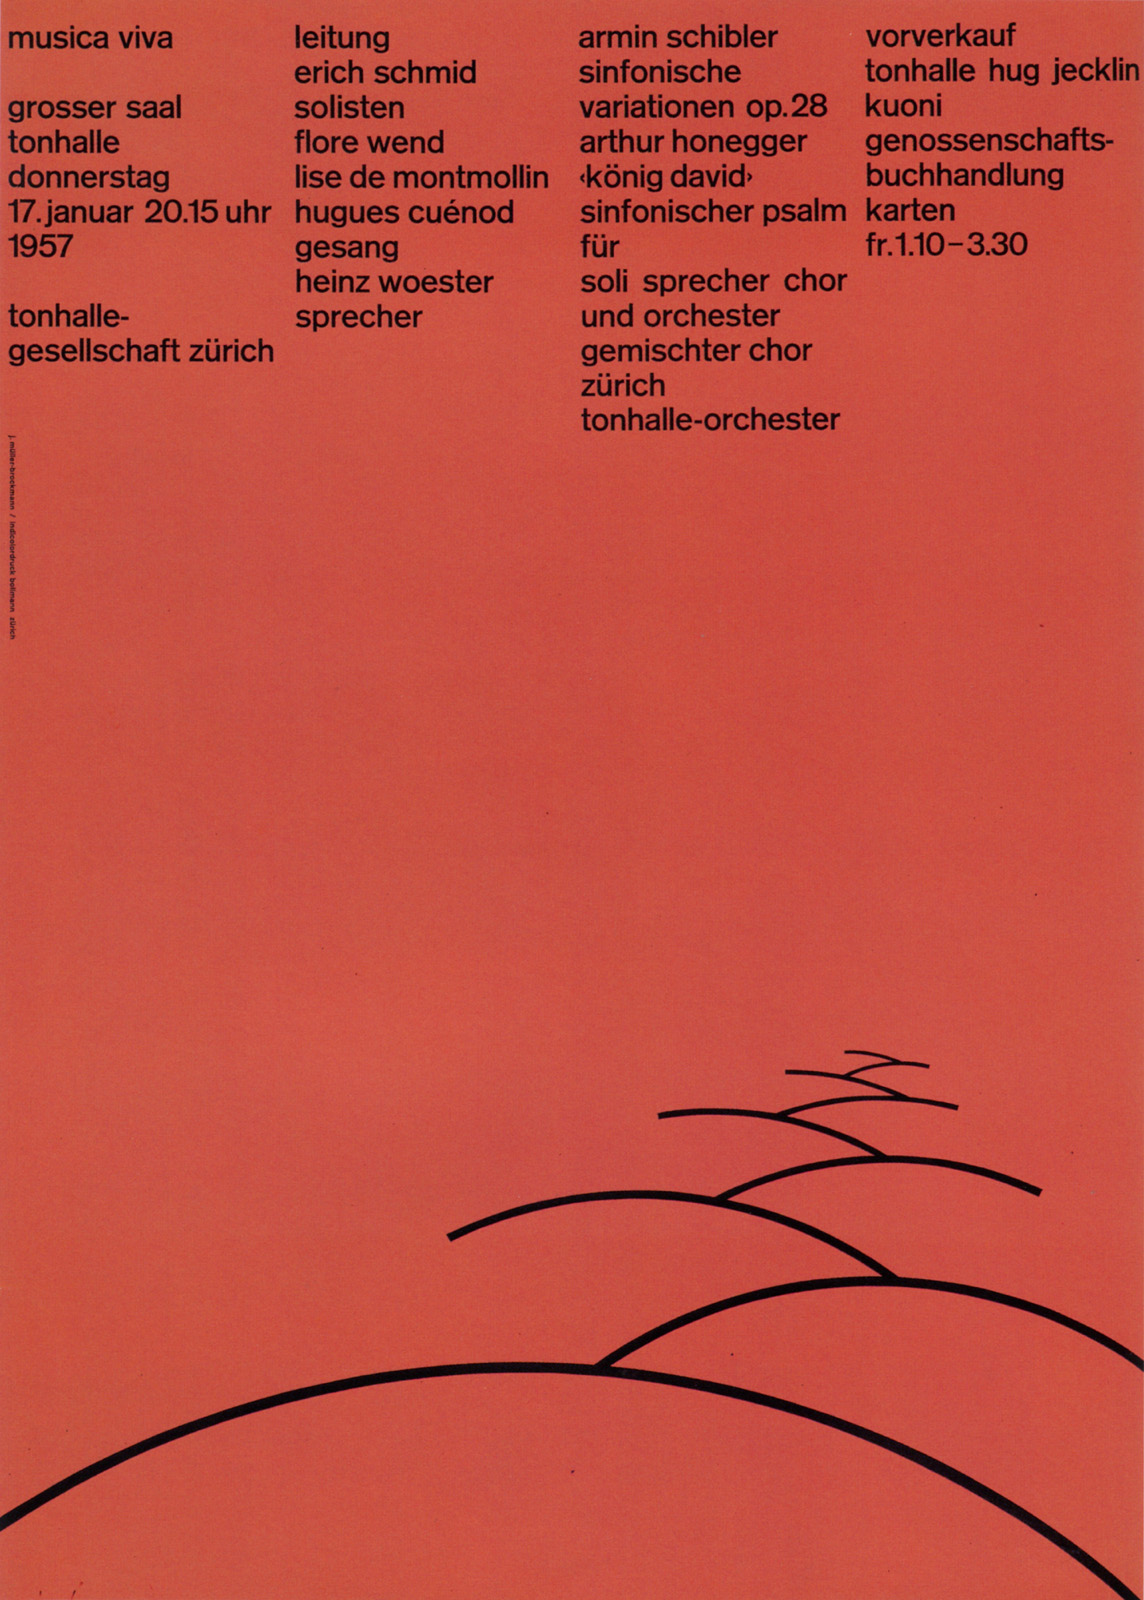 CHAUDRON: Joseph Müller-Brockmann - Musica Viva - Zurich Tonhalle Posters